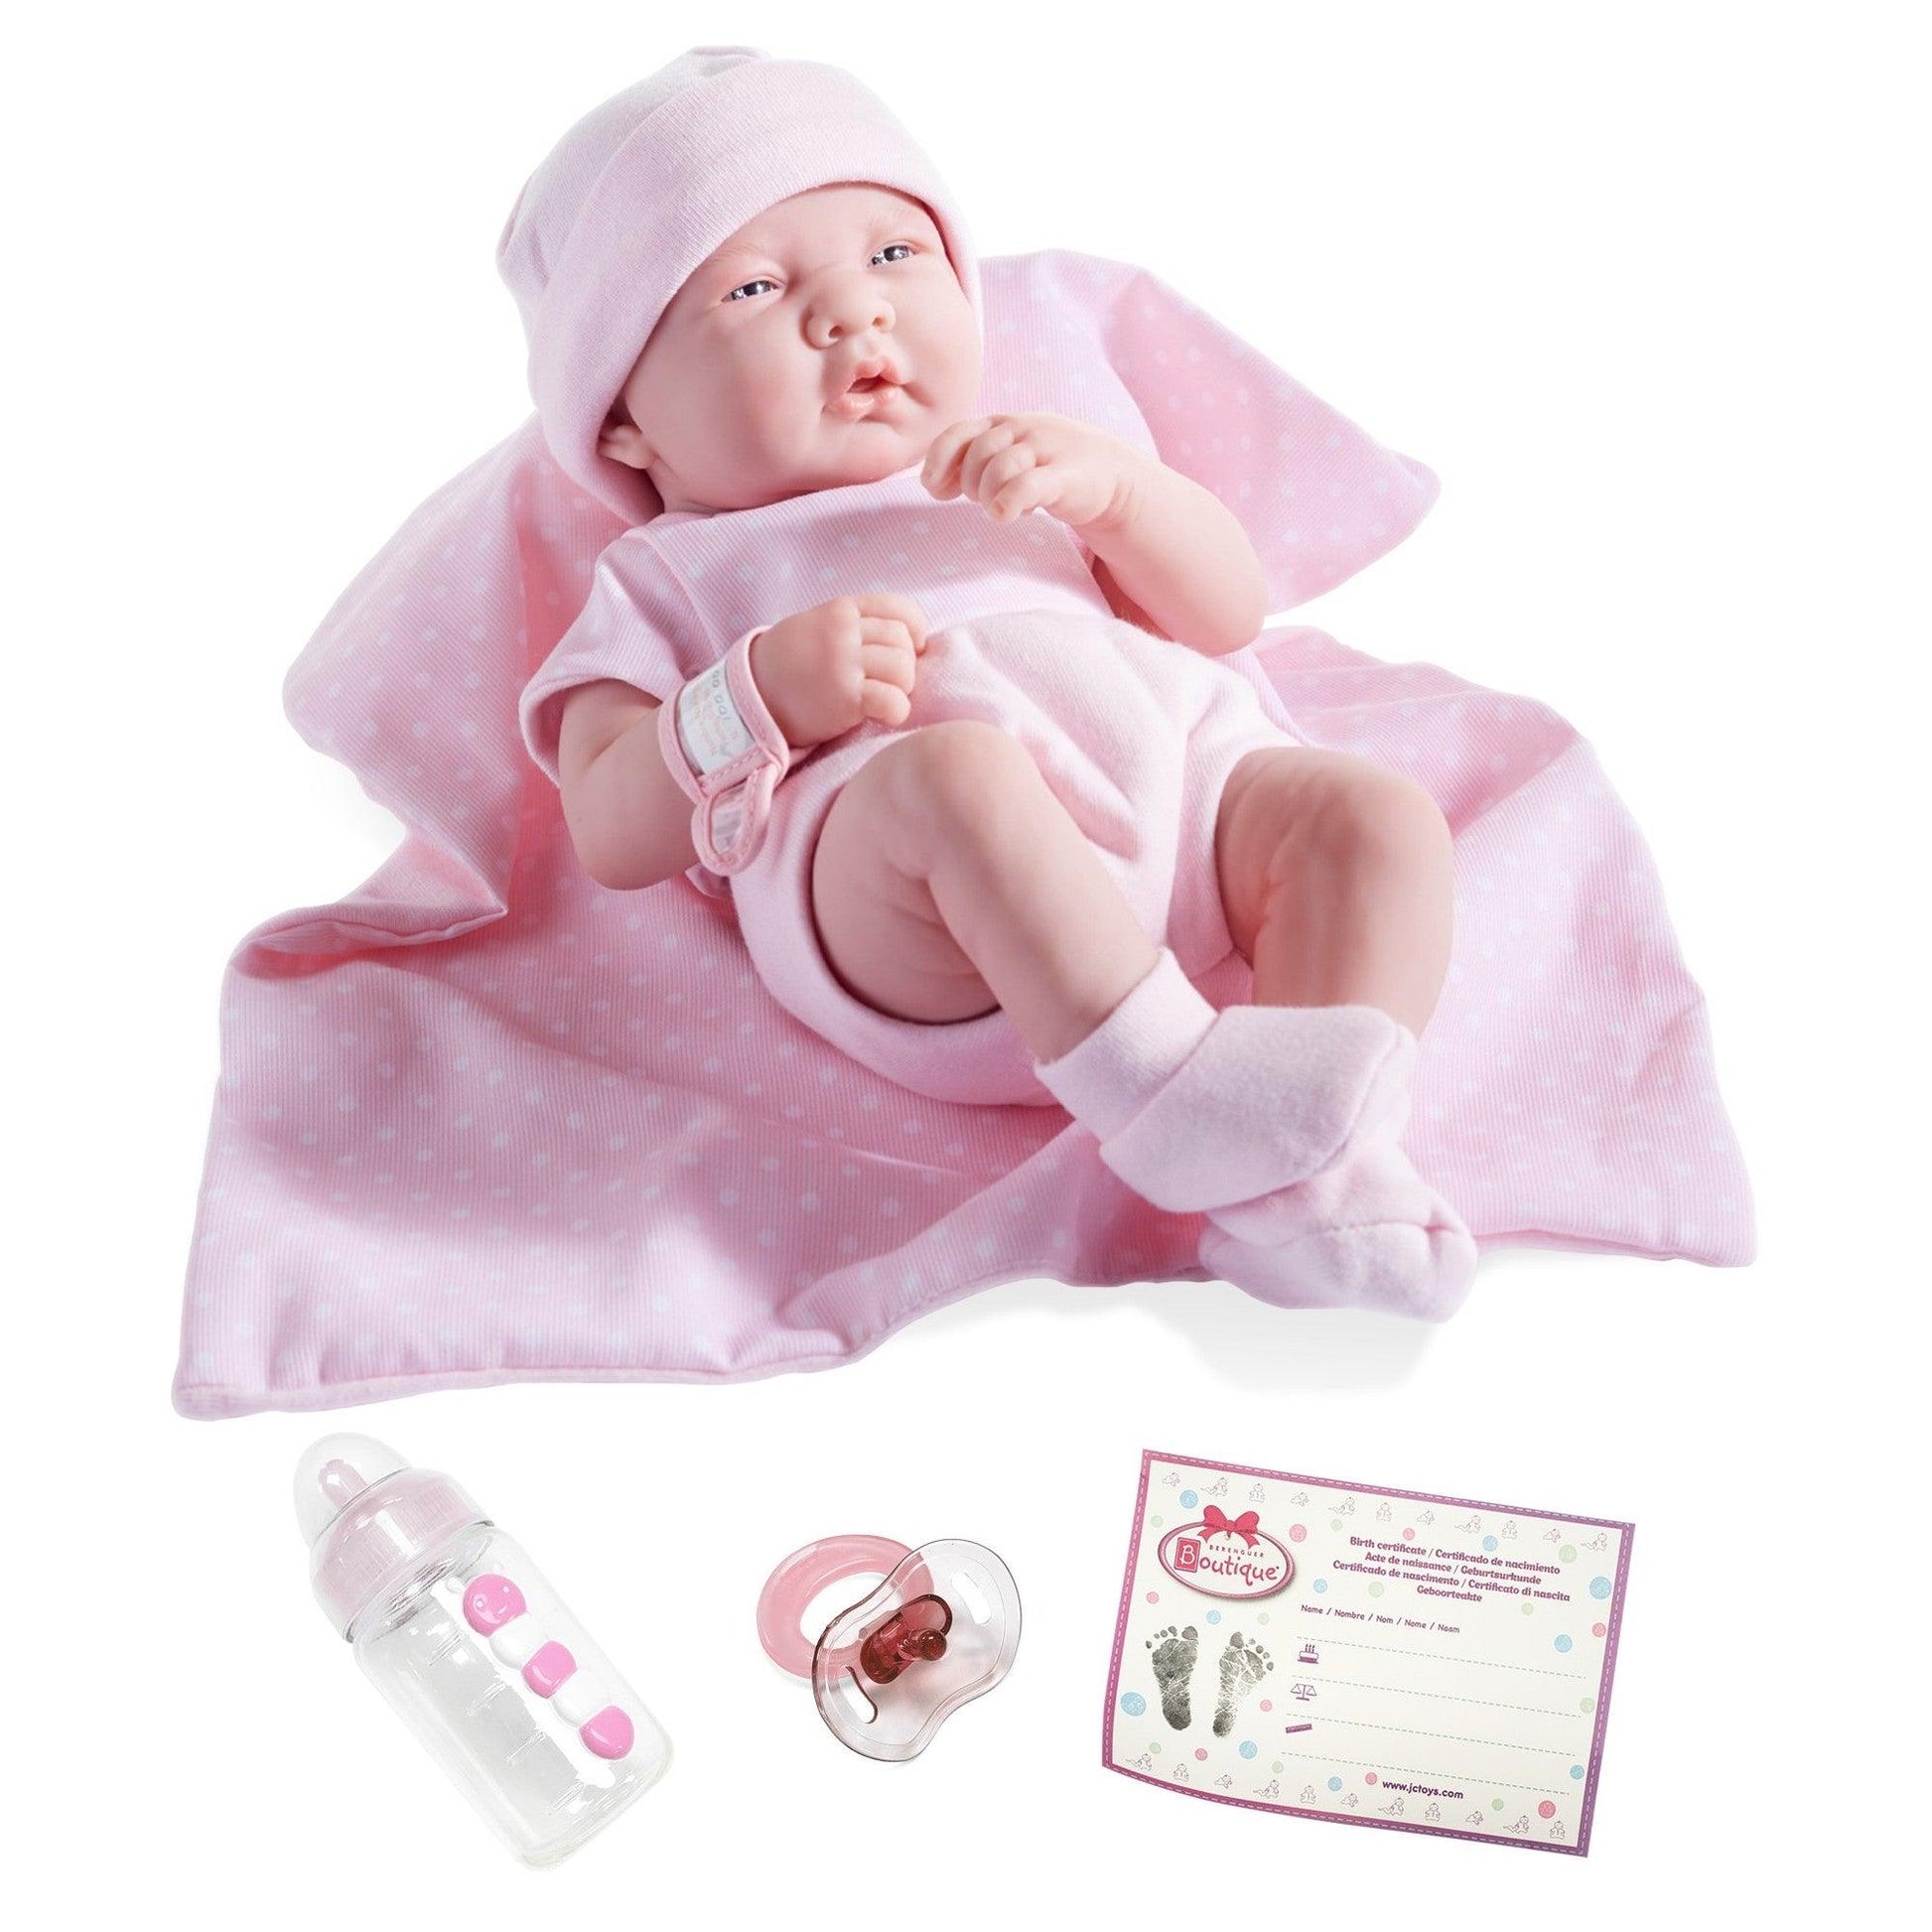 Buy Baby Girls' Juniors 14-Piece Printed Baby Clothing Gift Set